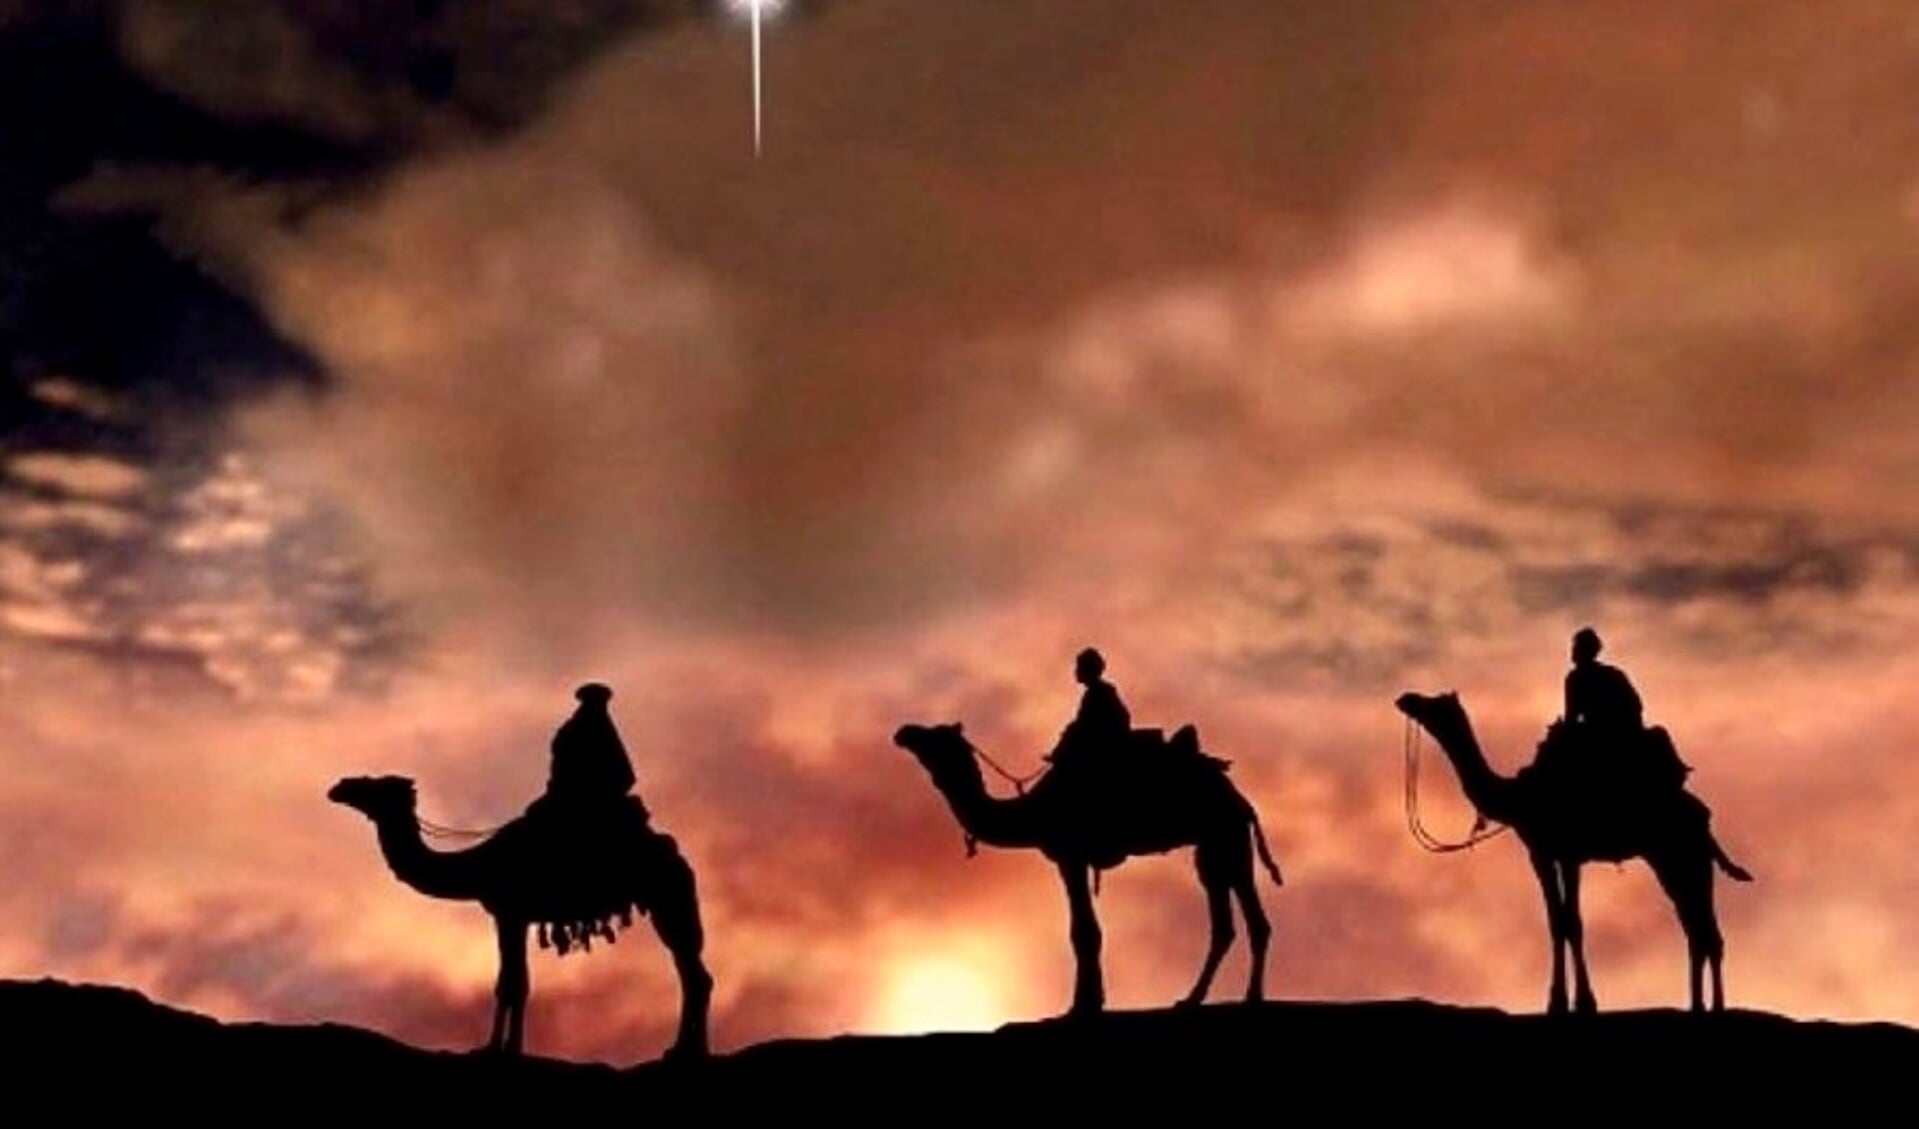 De ster van Bethlehem.